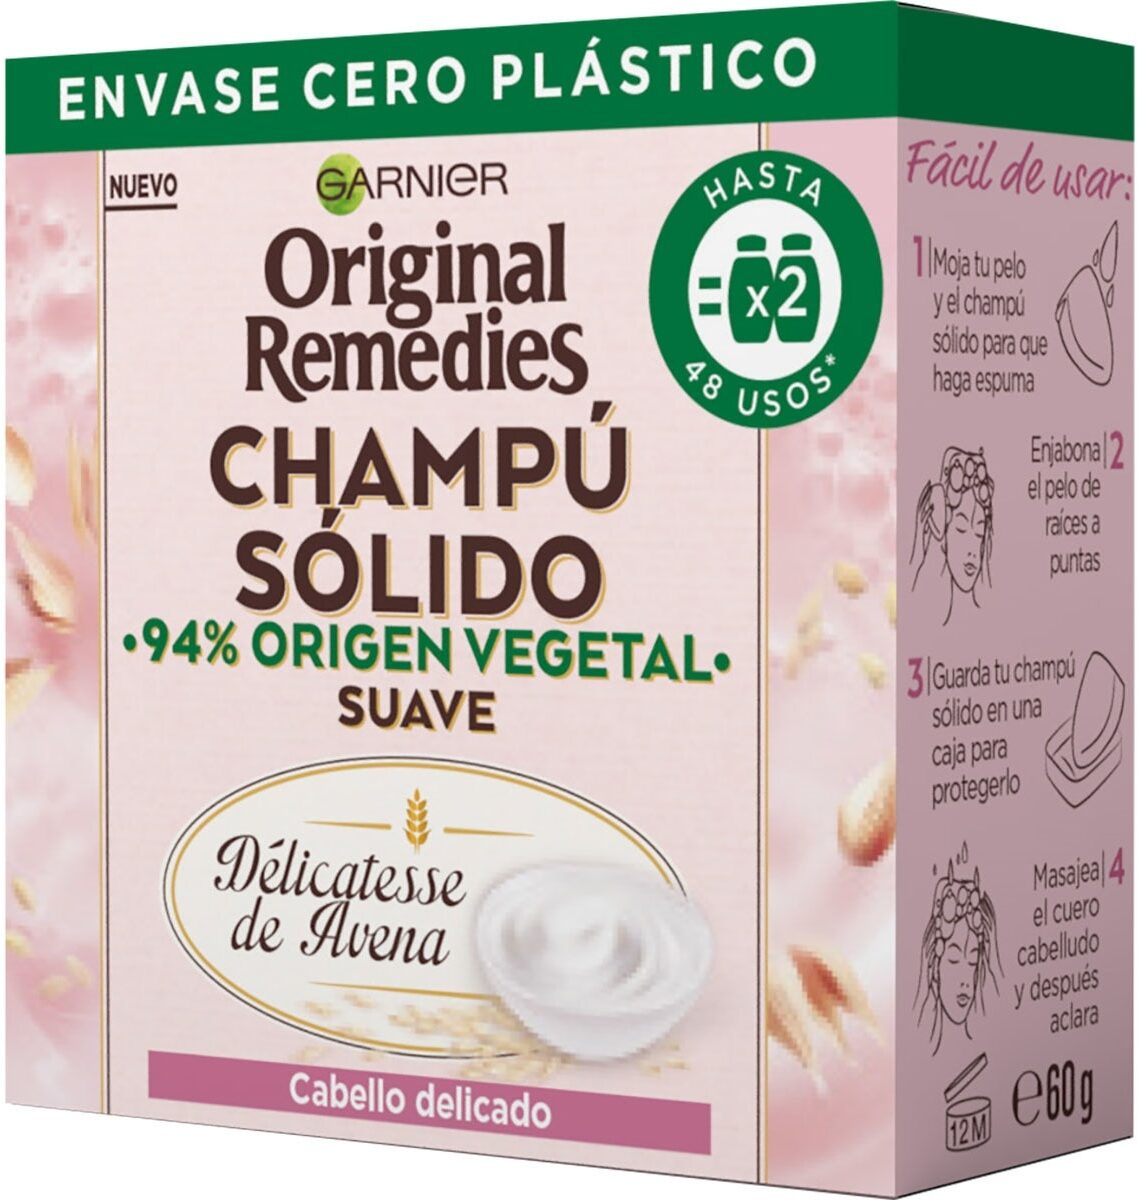 Original remedies champú solido avena - Product - en